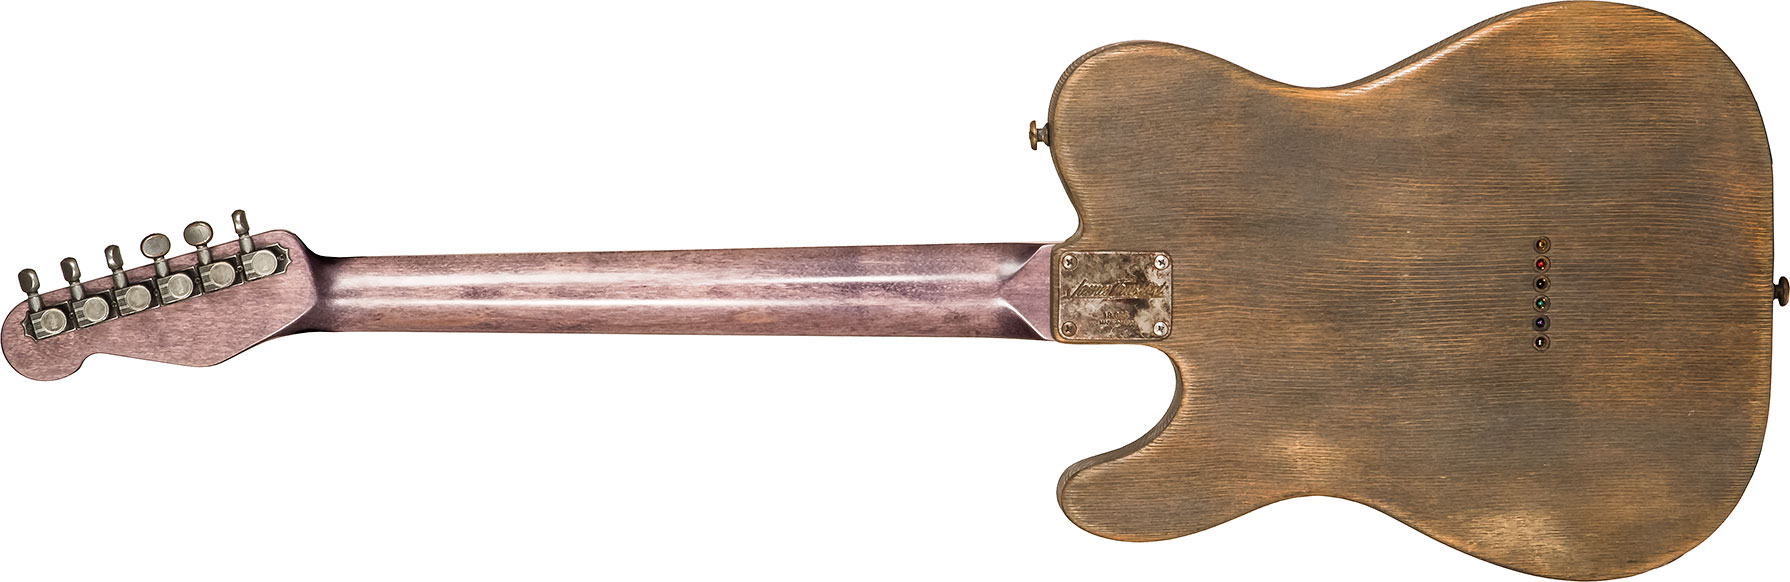 James Trussart Steelguard Caster Sugar Pine Sh Eb #18035 - Rust O Matic Gator Grey Driftwood - Tel shape electric guitar - Variation 1